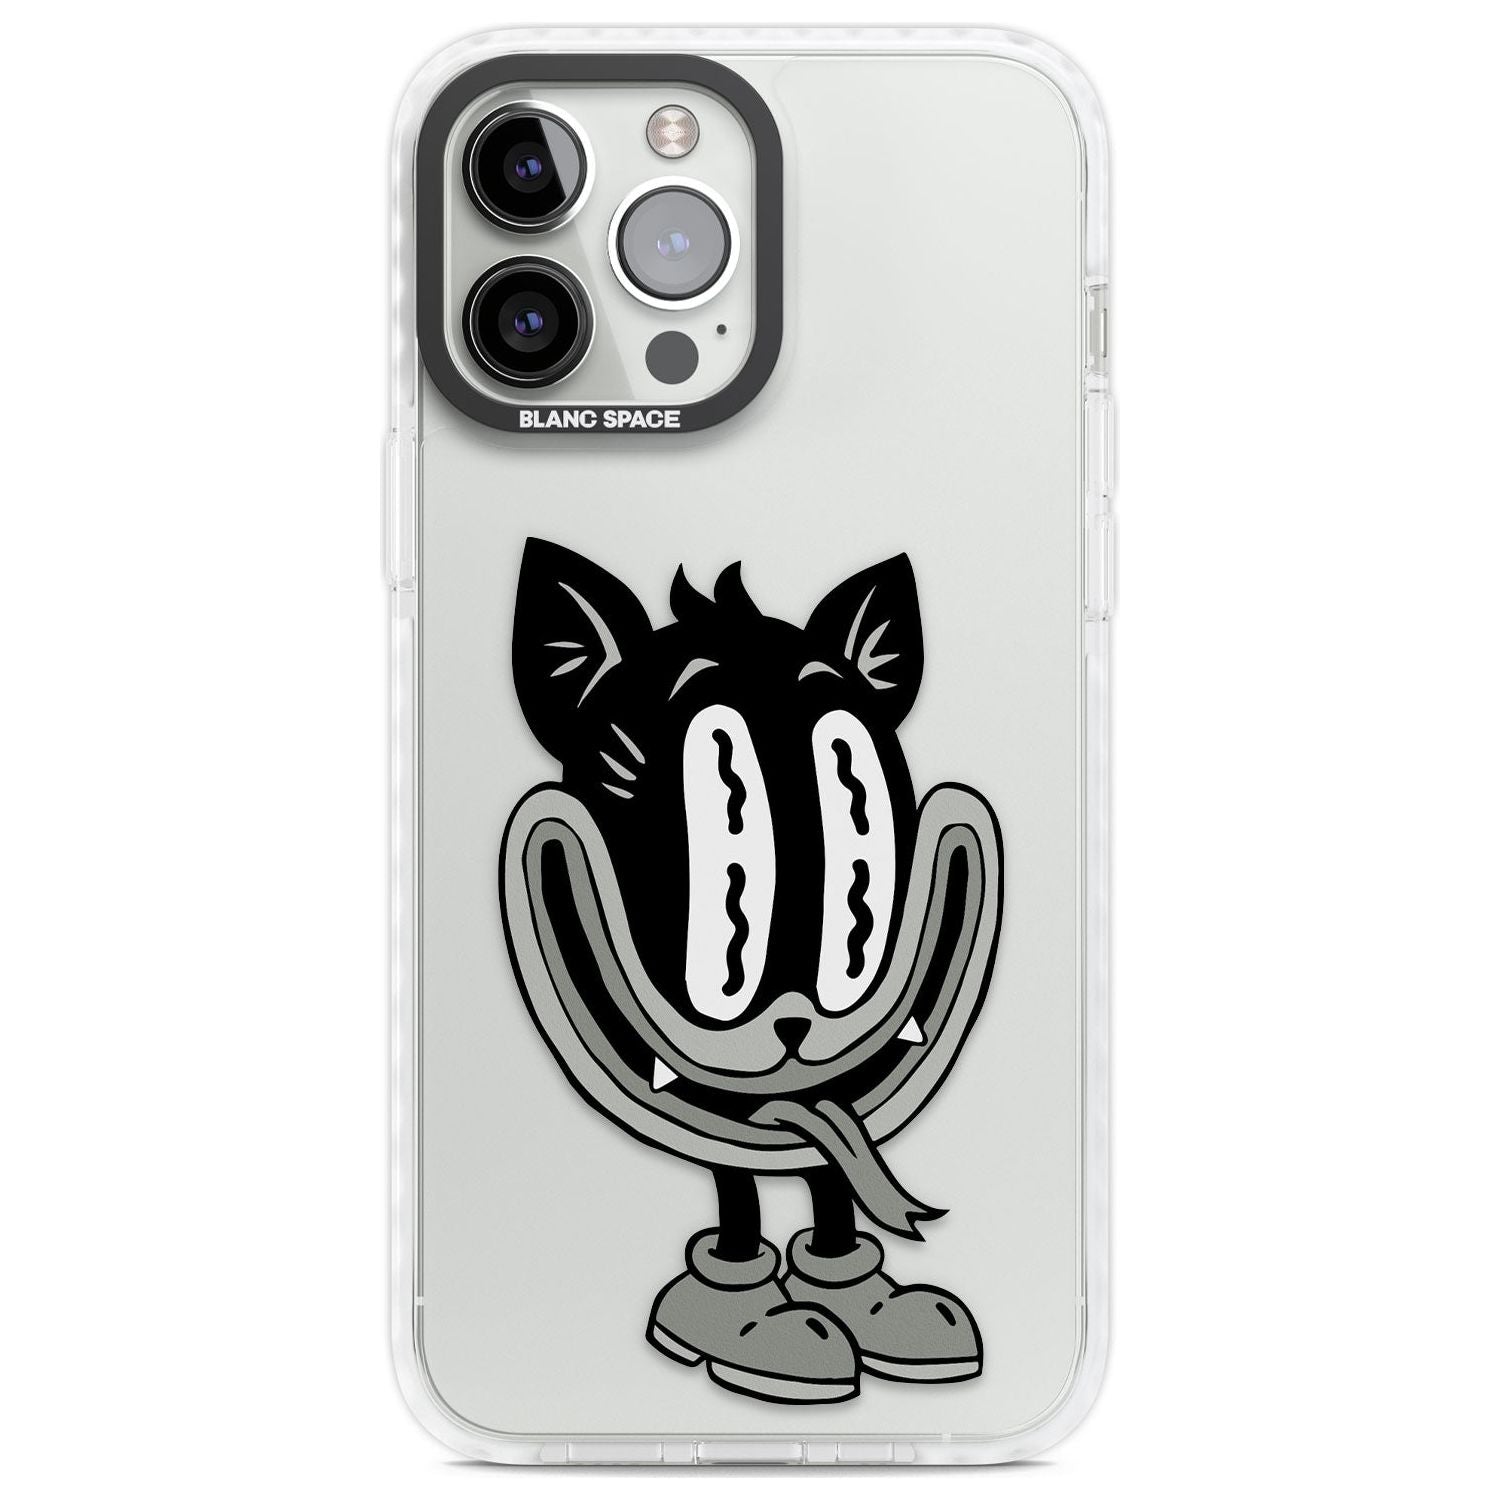 Faded Feline Phone Case iPhone 13 Pro Max / Impact Case,iPhone 14 Pro Max / Impact Case Blanc Space